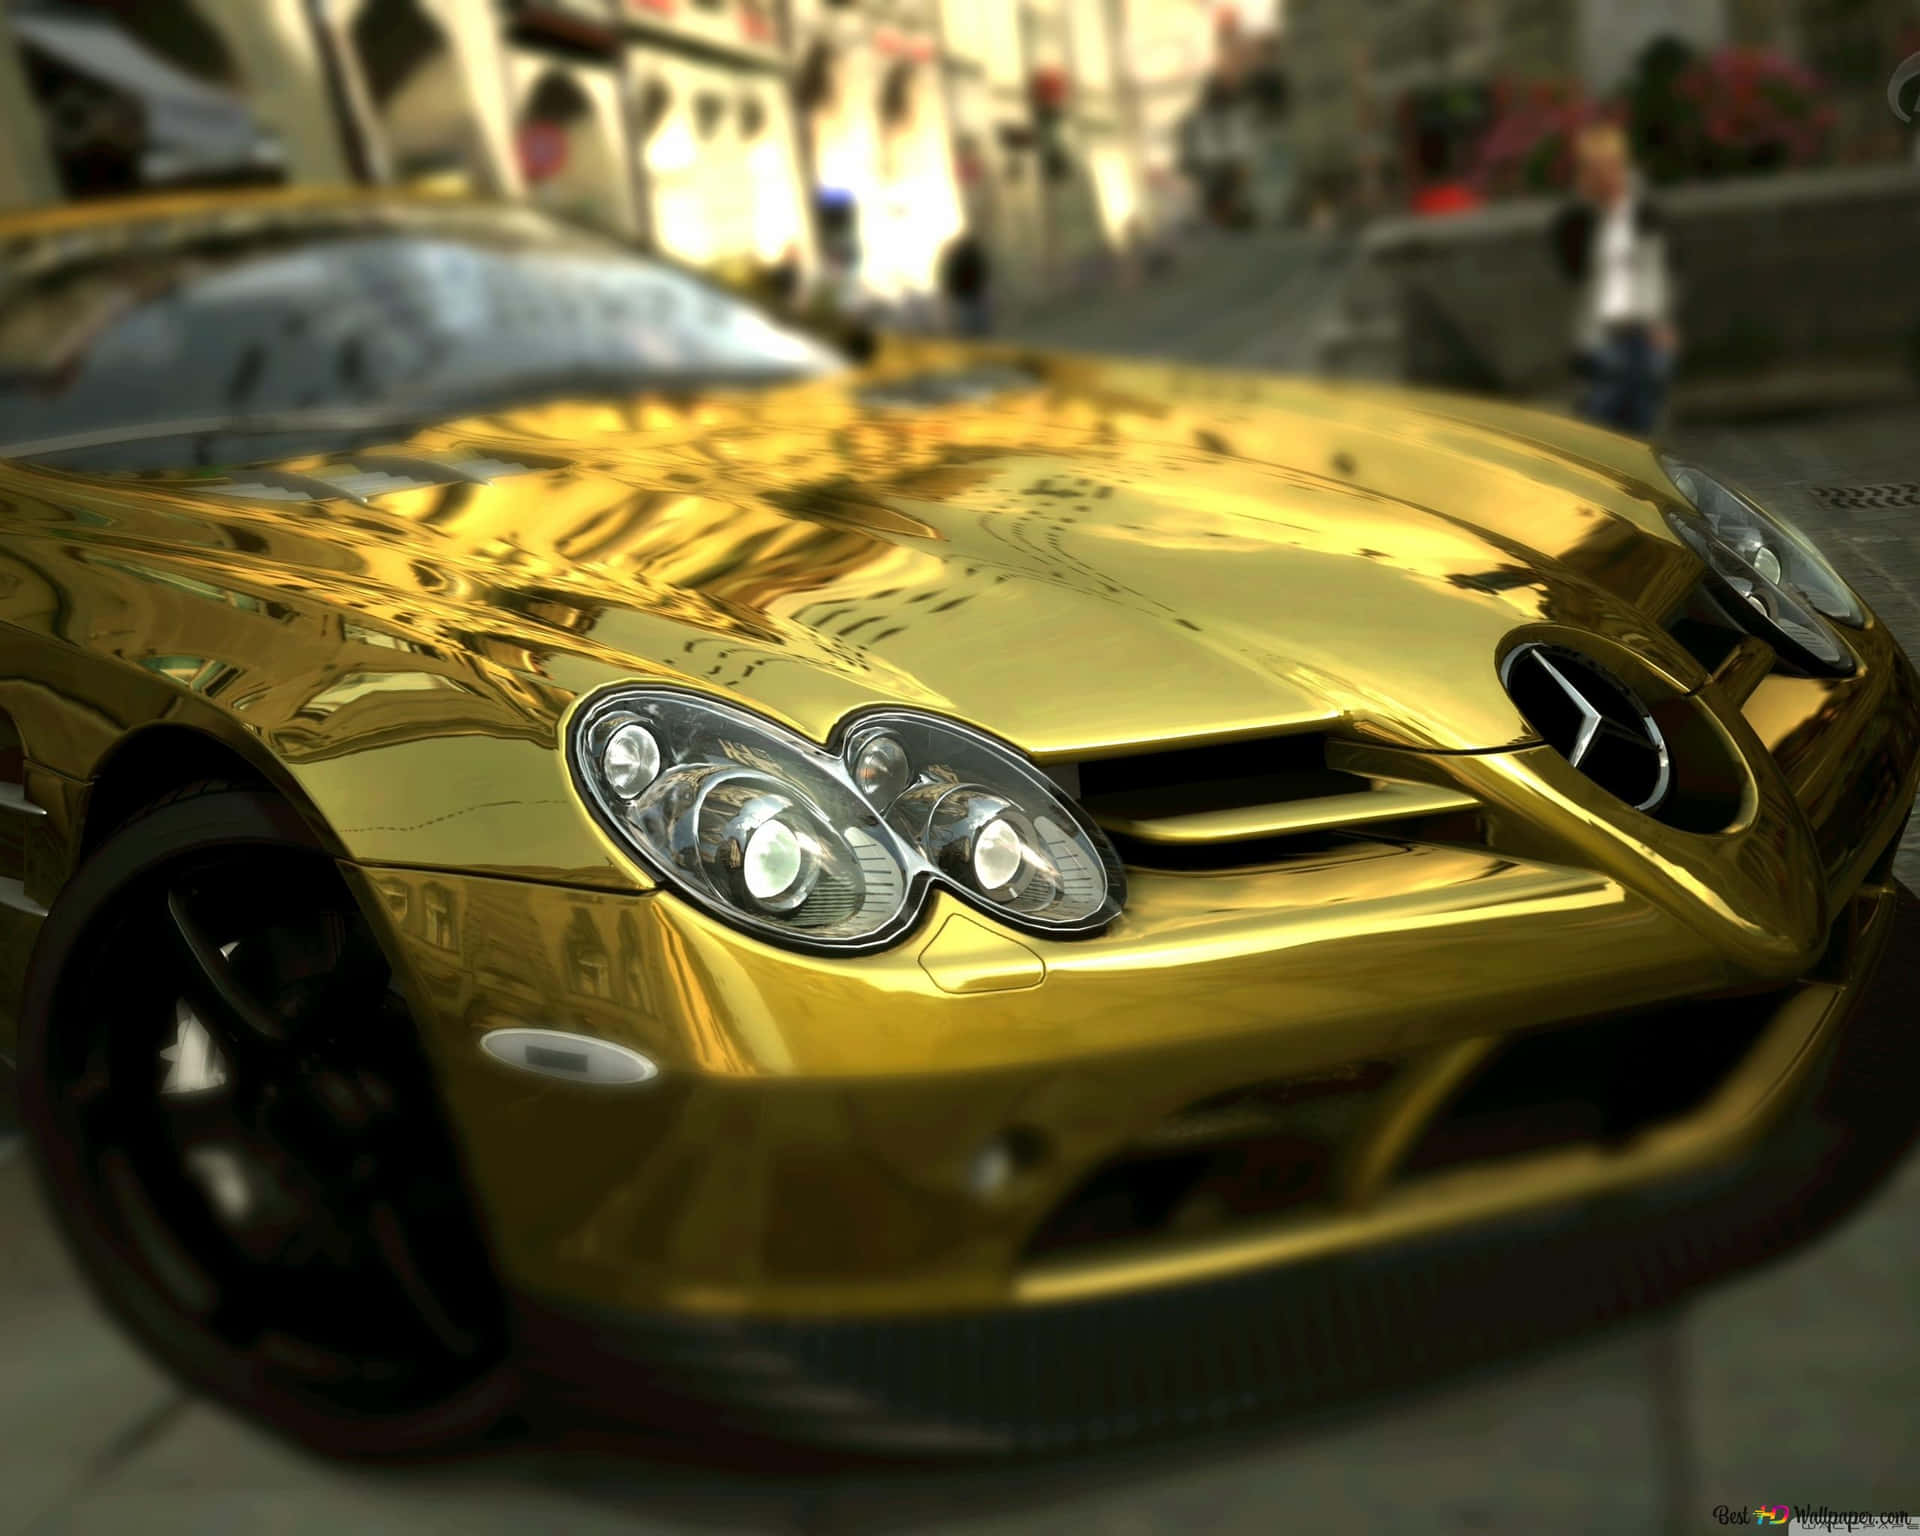 Shiny Gold Cars Mercedes Benz